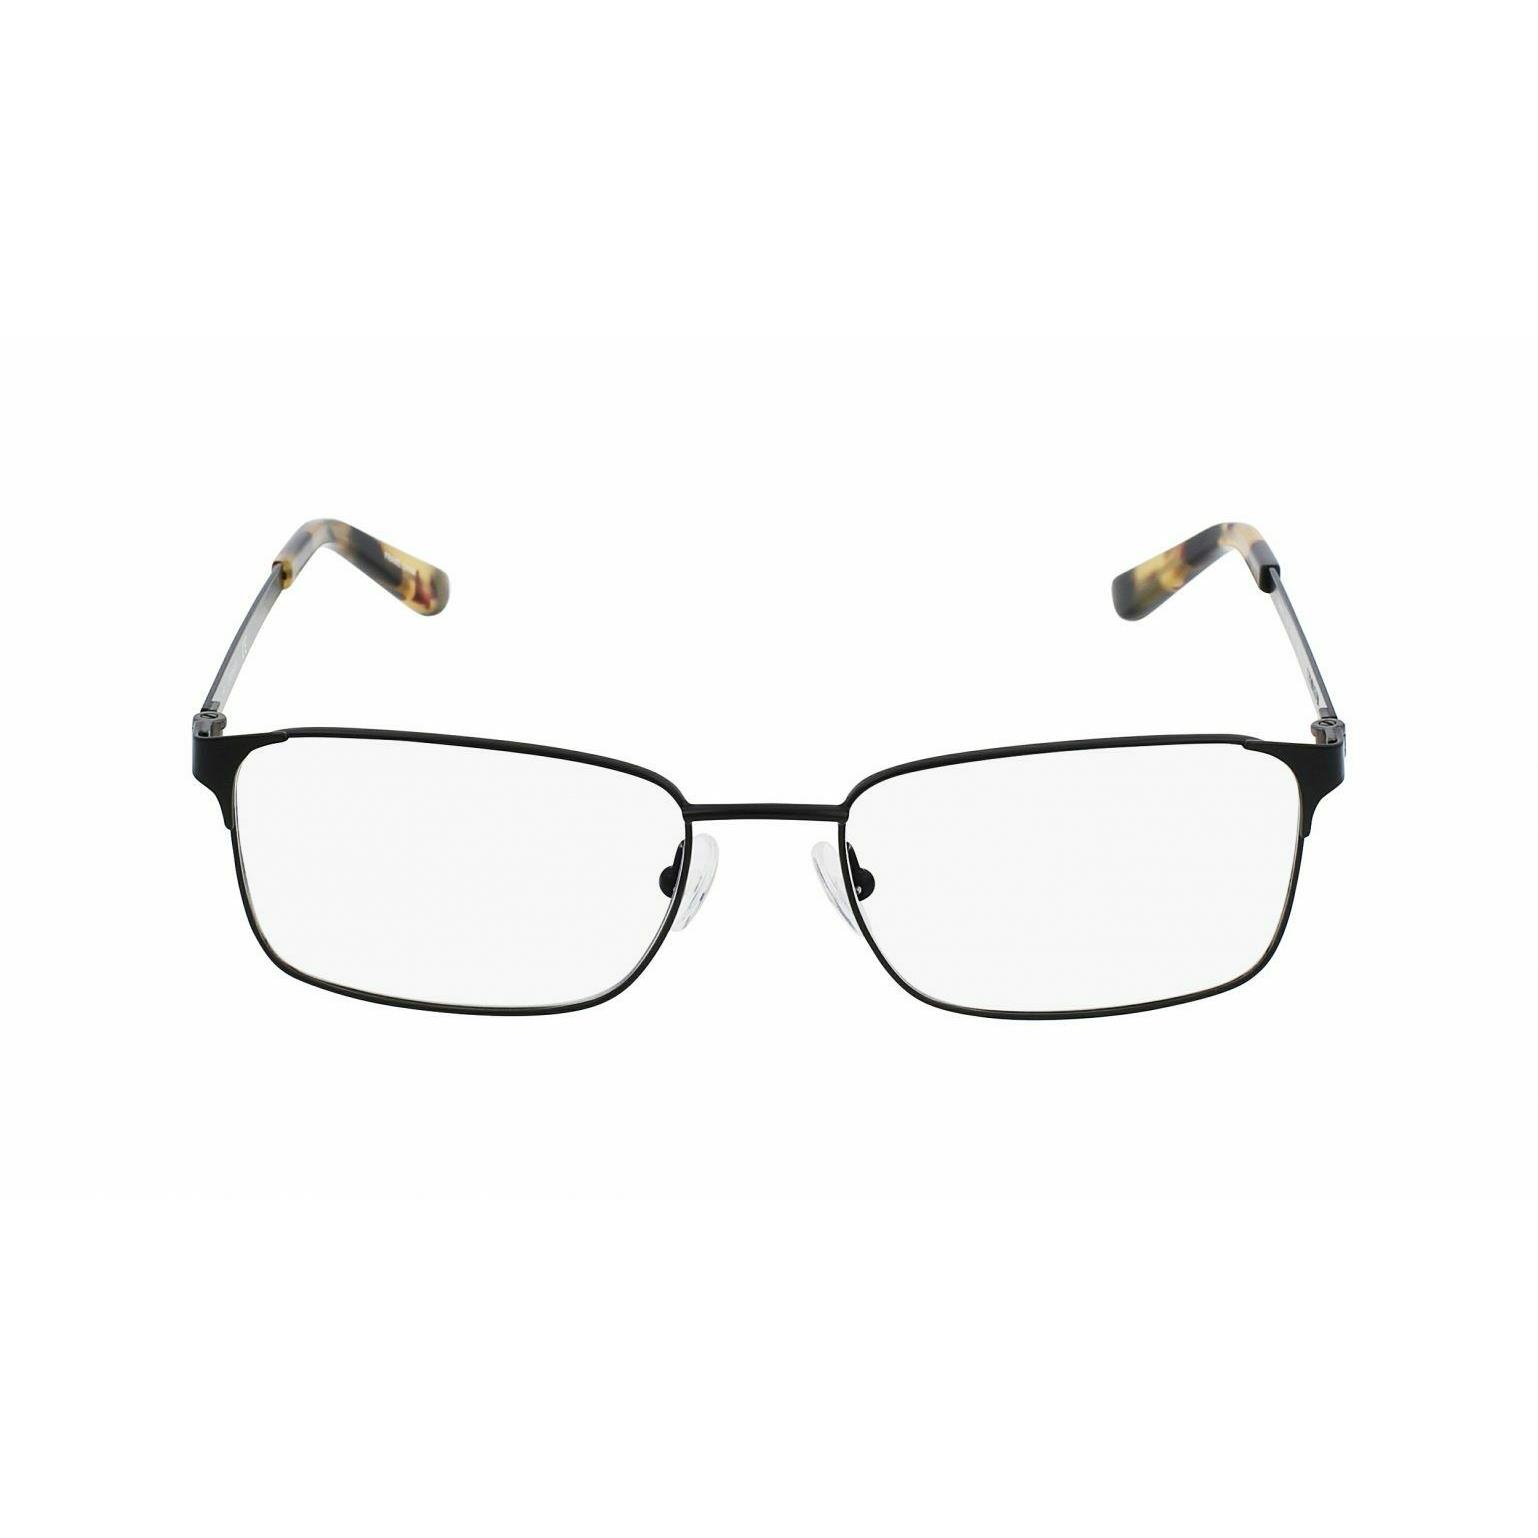 2 Pair Calvin Klein Eyeglass Frames One Black One Brown 53-17-140